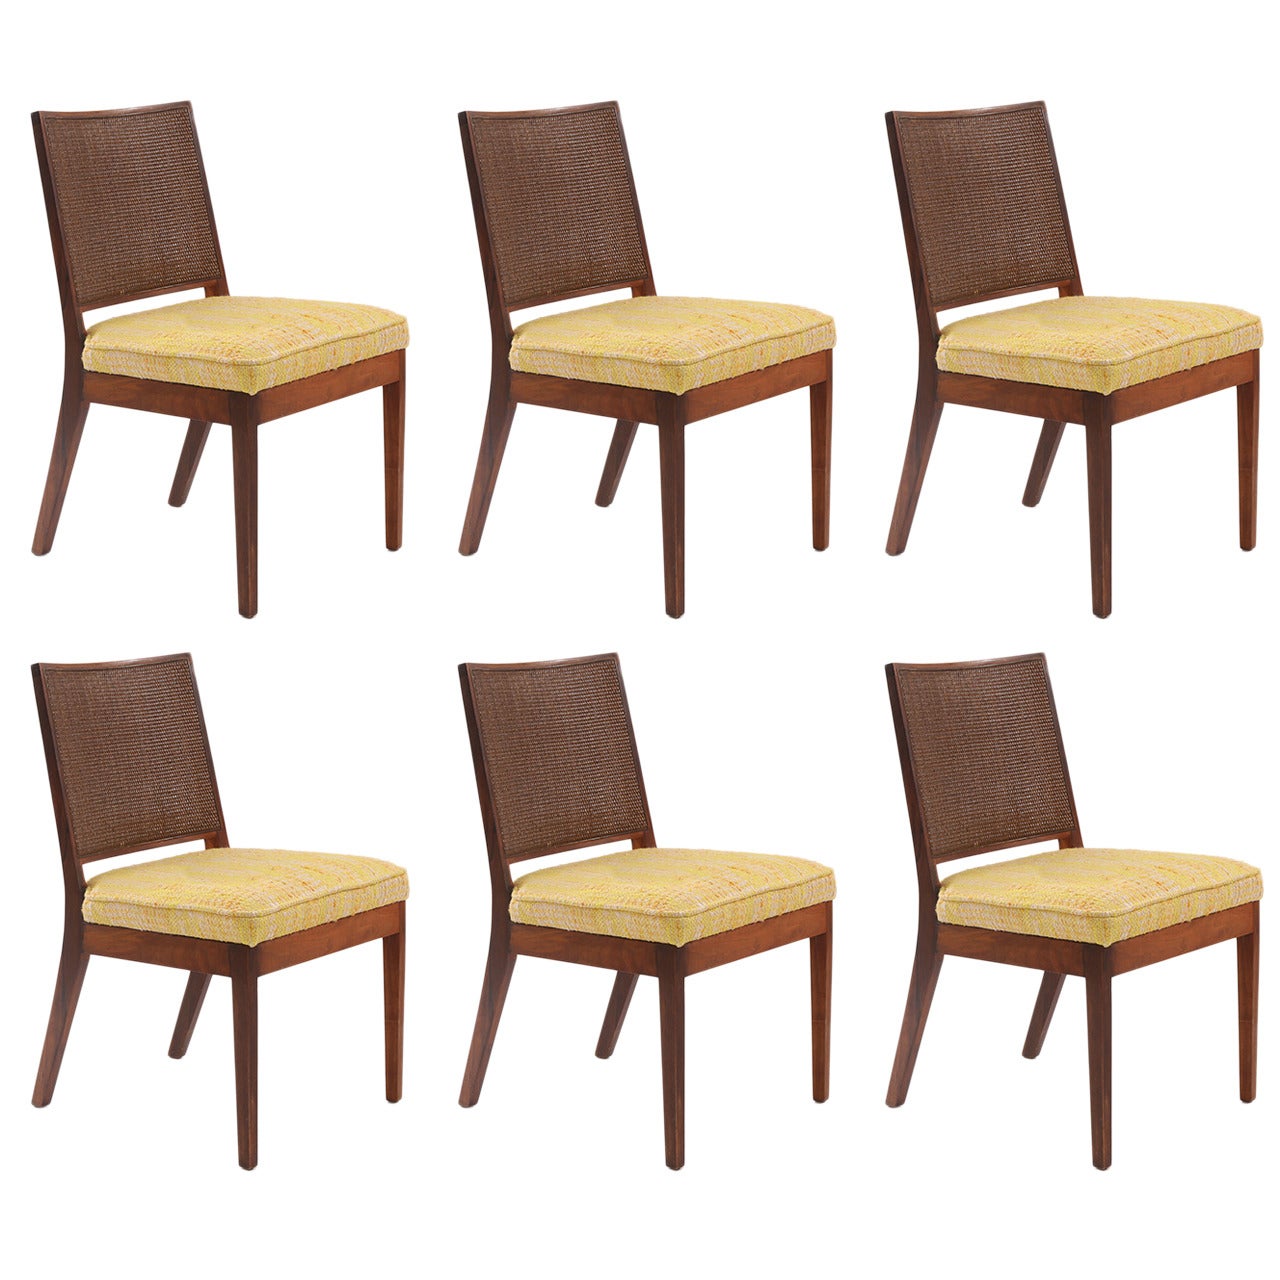 Six Solid Walnut Dining Chairs by John Kapel